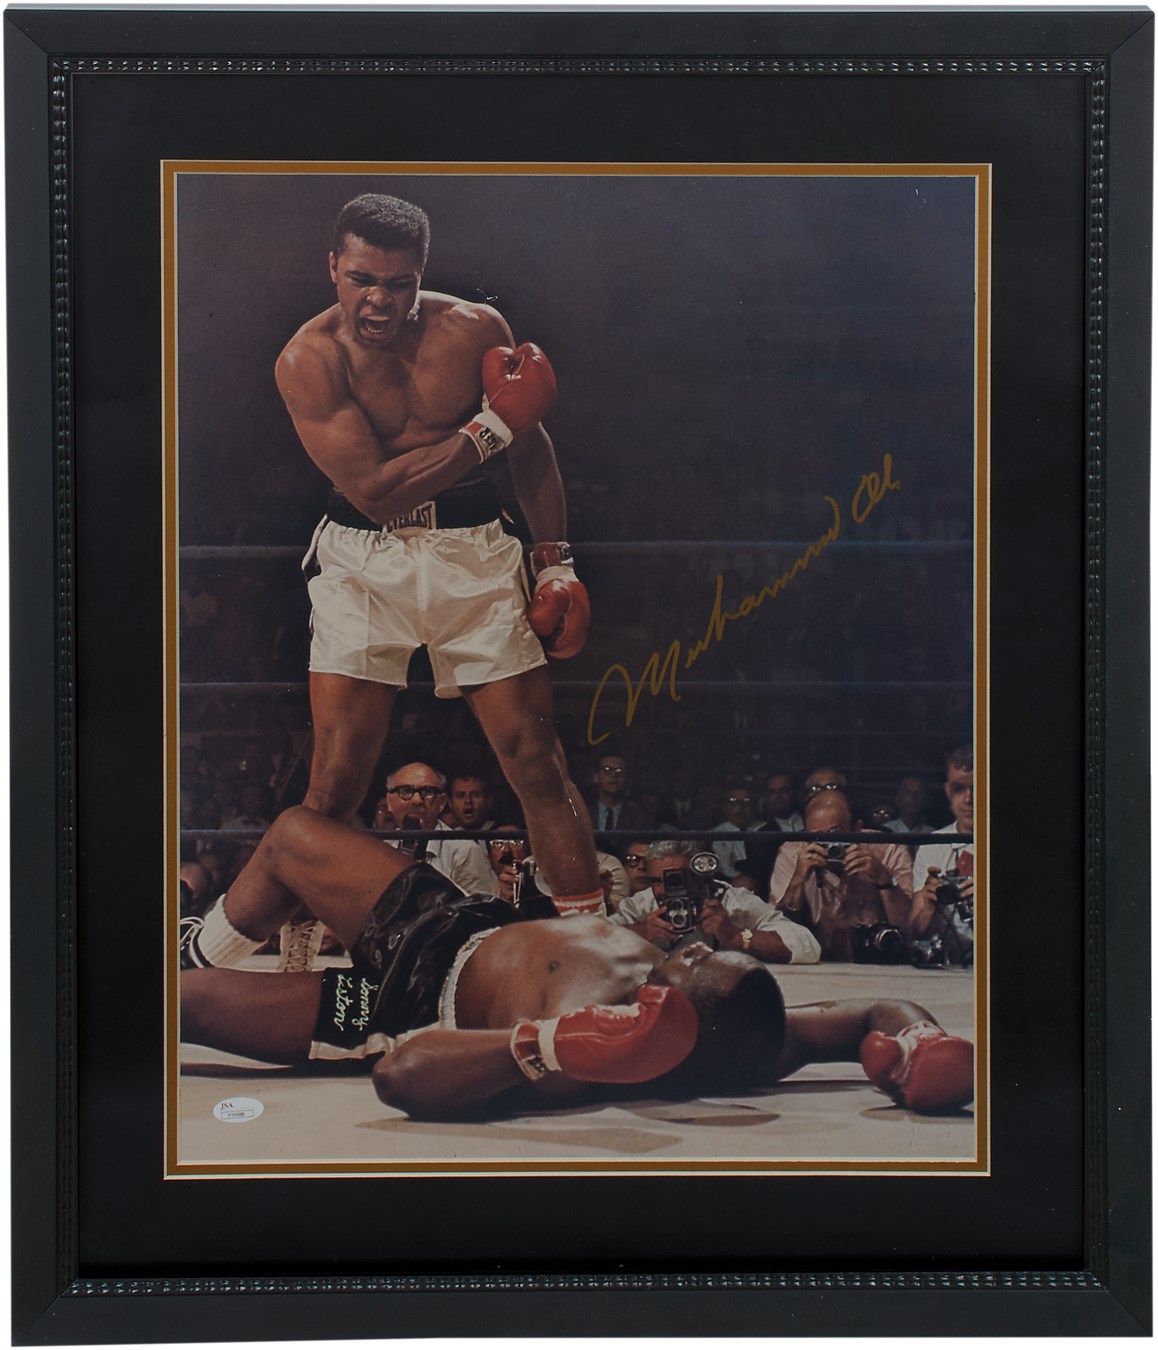 Muhammad Ali Signed Photo Over Sonny Liston with Large Vintage Signature (JSA)